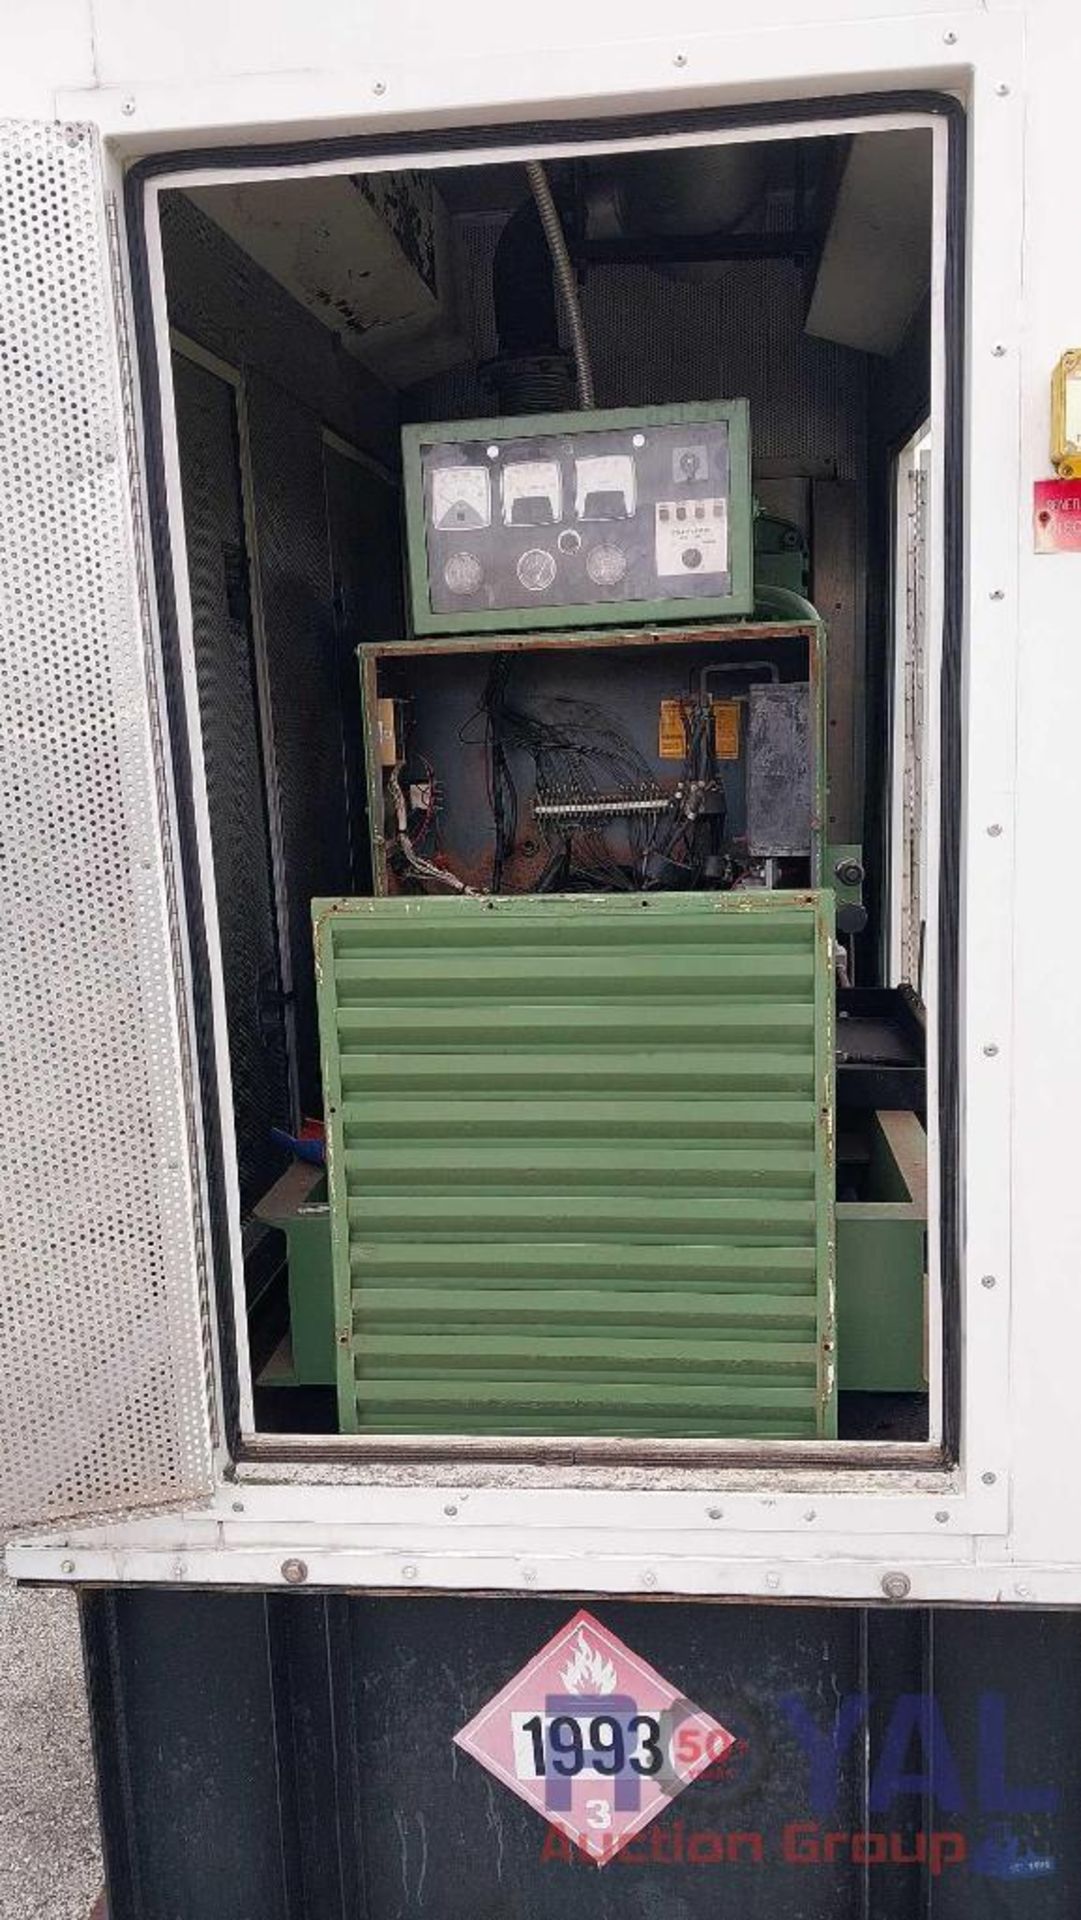 155 KW Generator - Image 20 of 31